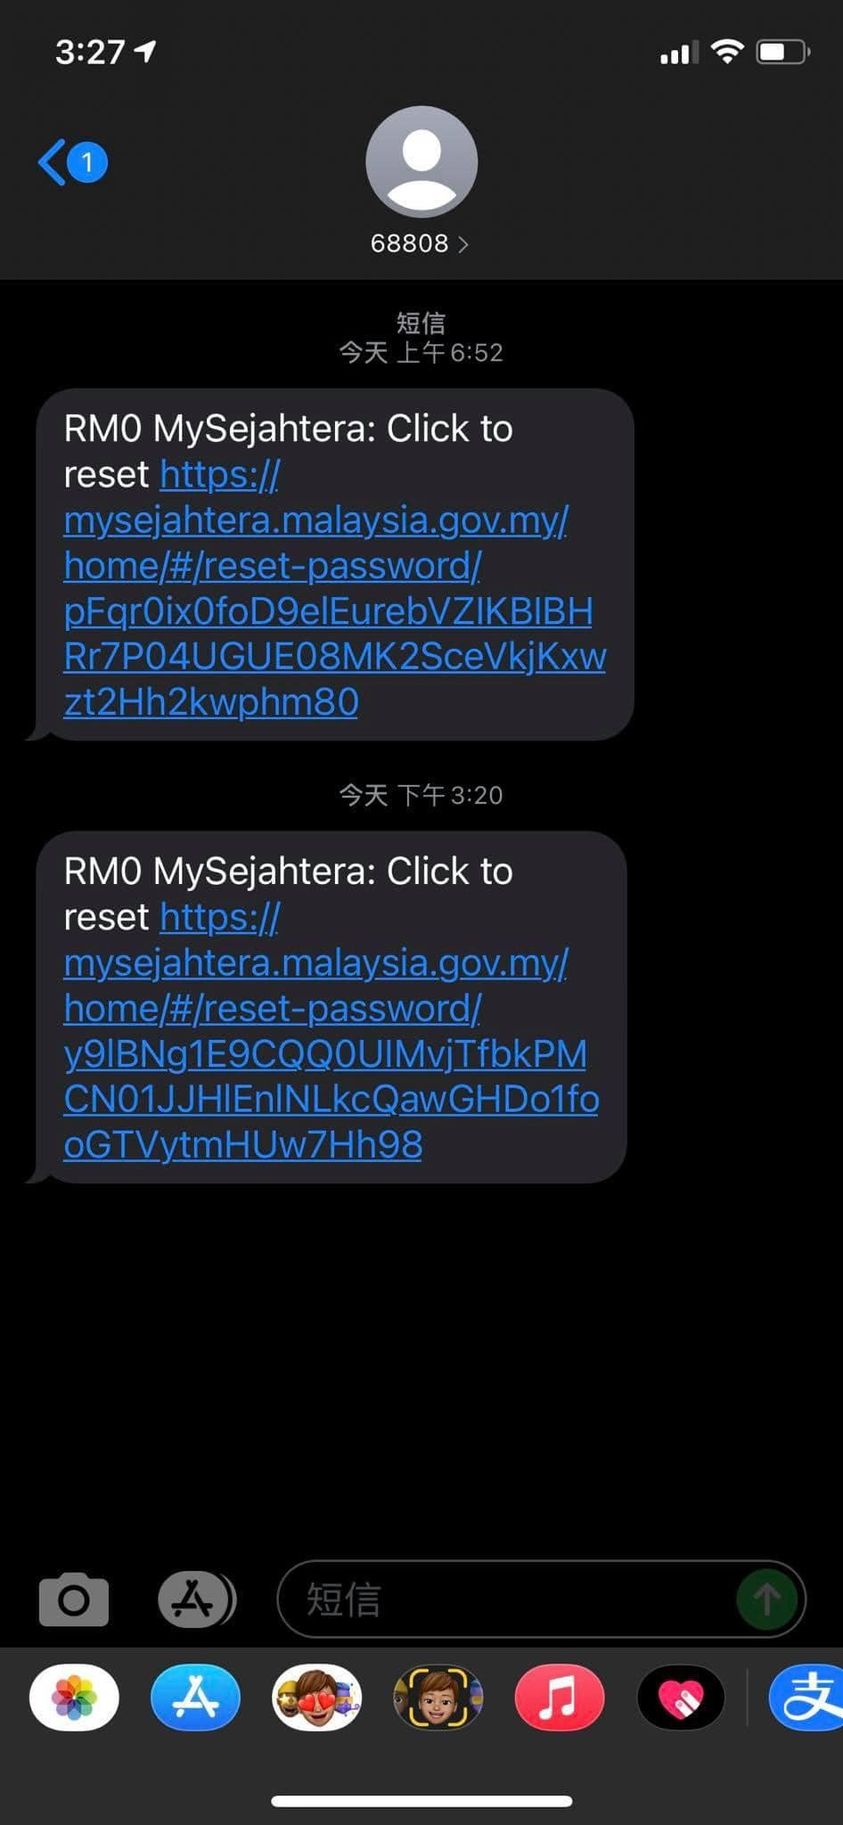 A screenshot of the alleged password reset message.